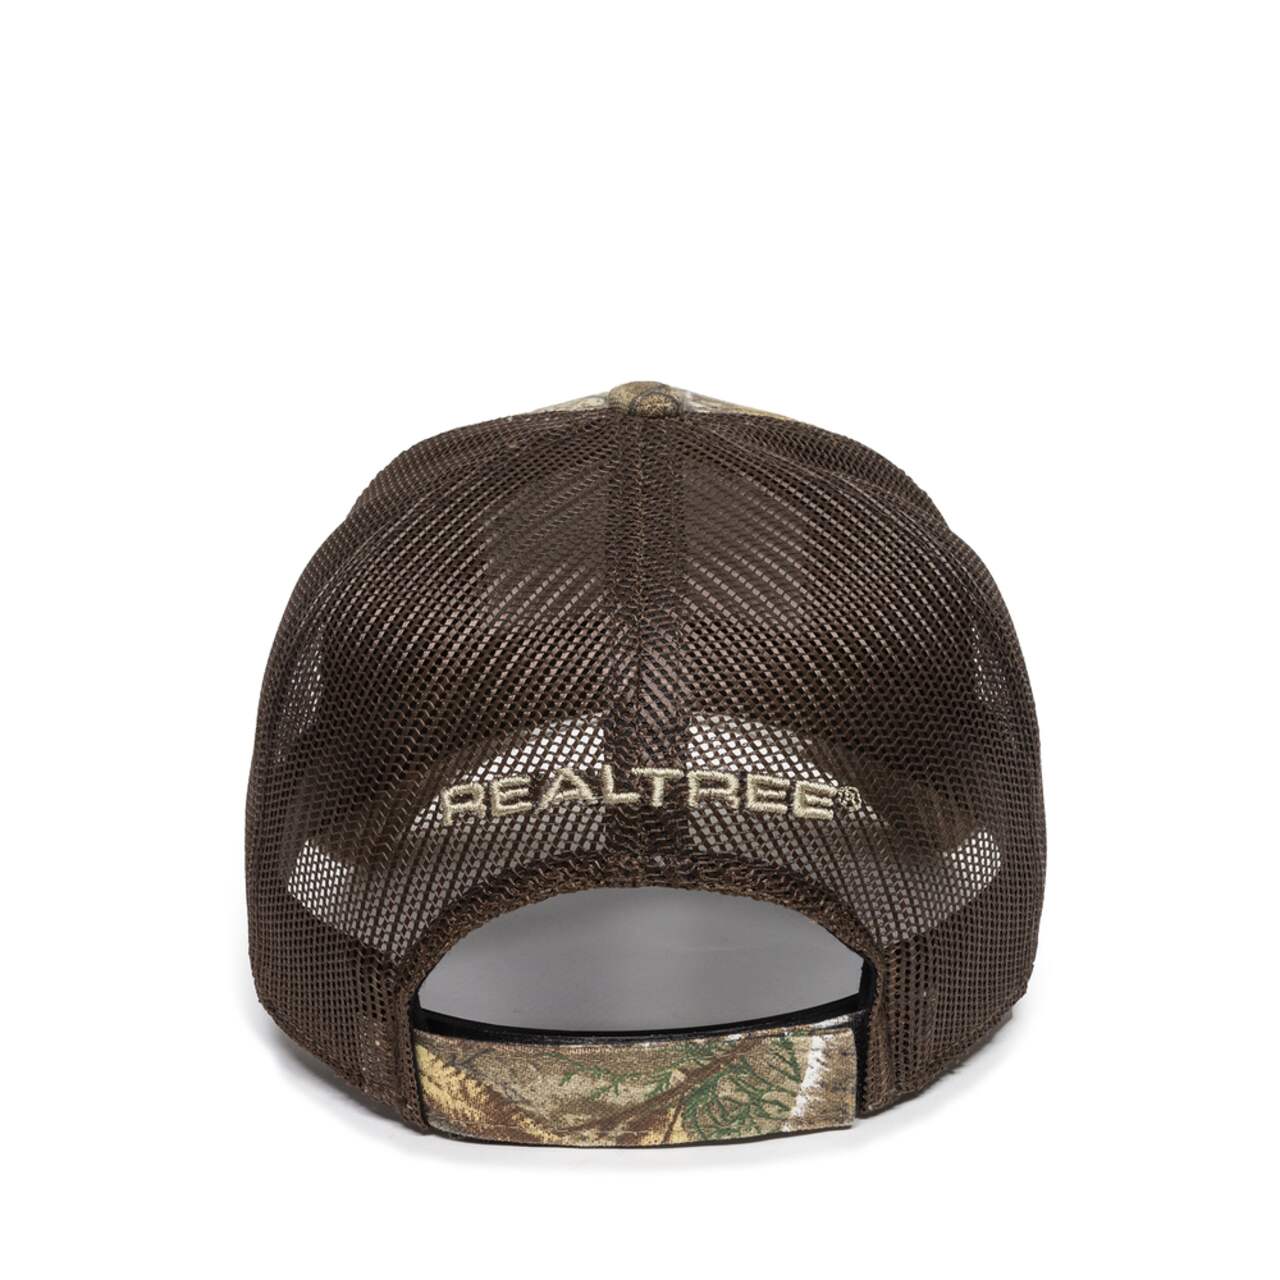 Yukon Gear HG Warm Fleece Balaclava/Hat with Facemask for Full